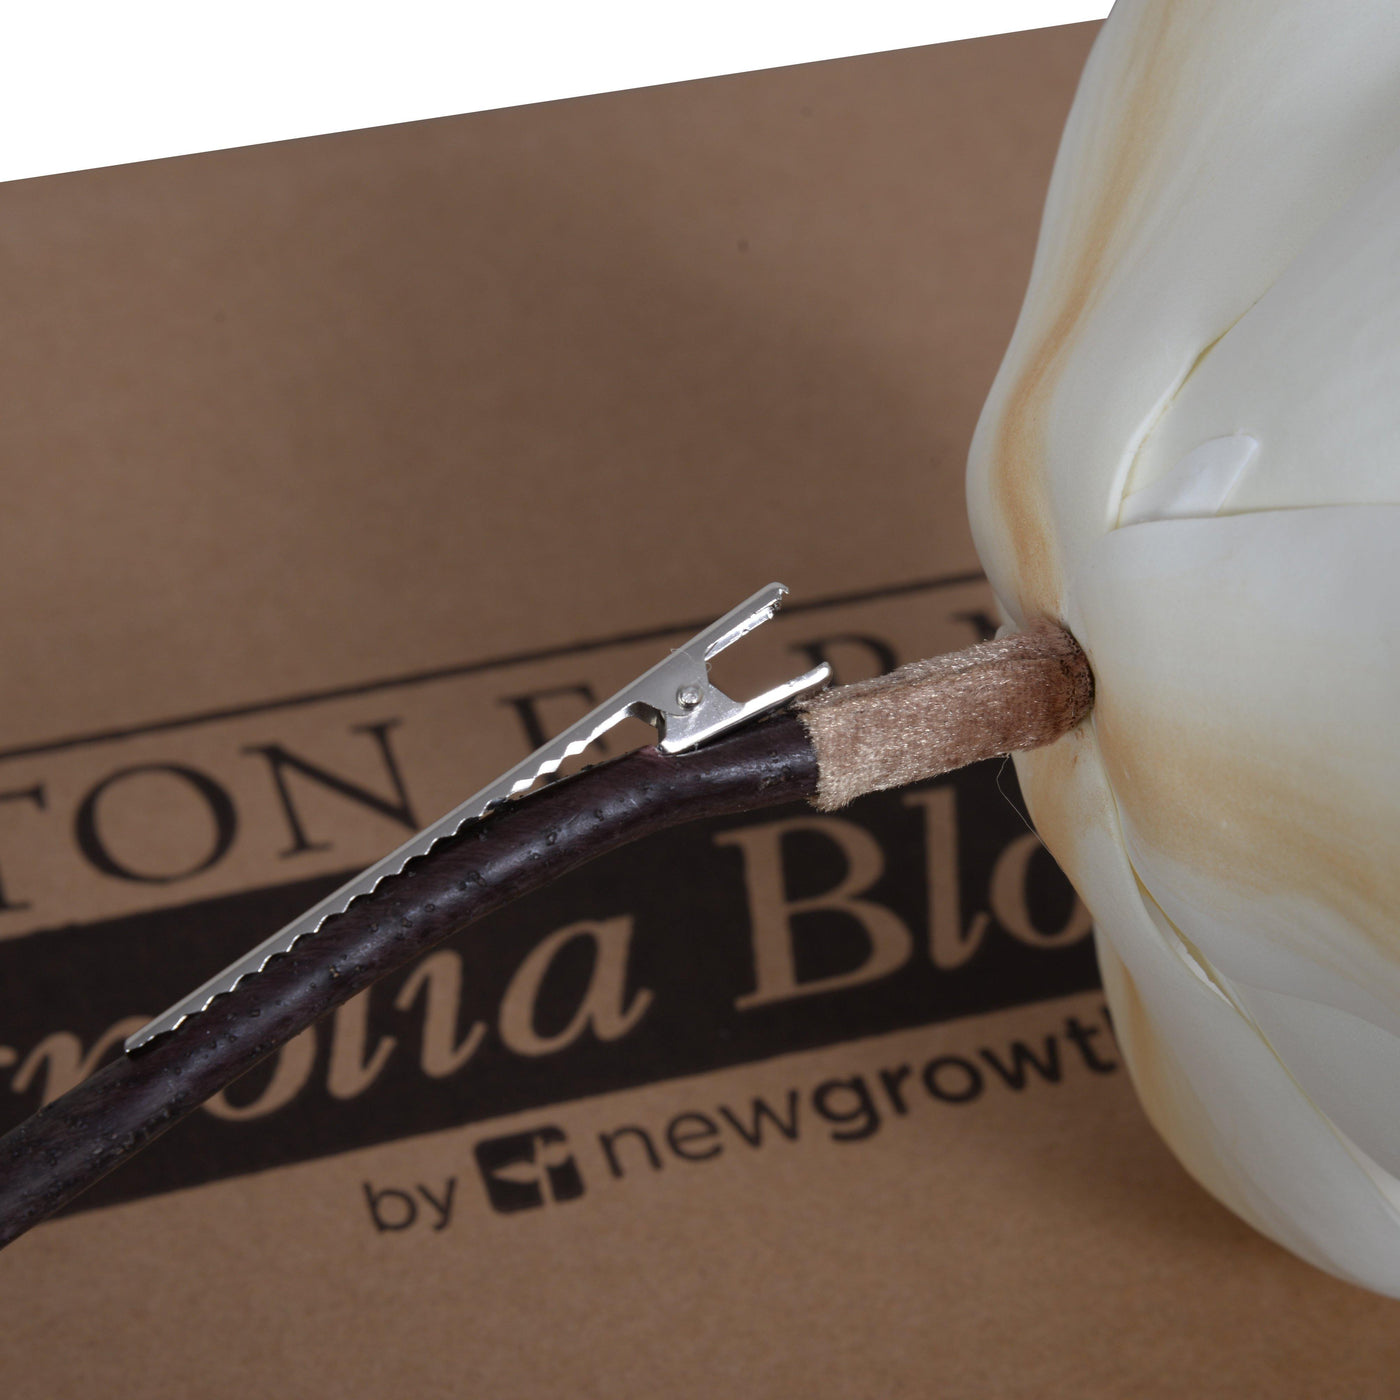 Magnolia Bloom, 5" D - Weston Farms - New Growth Designs